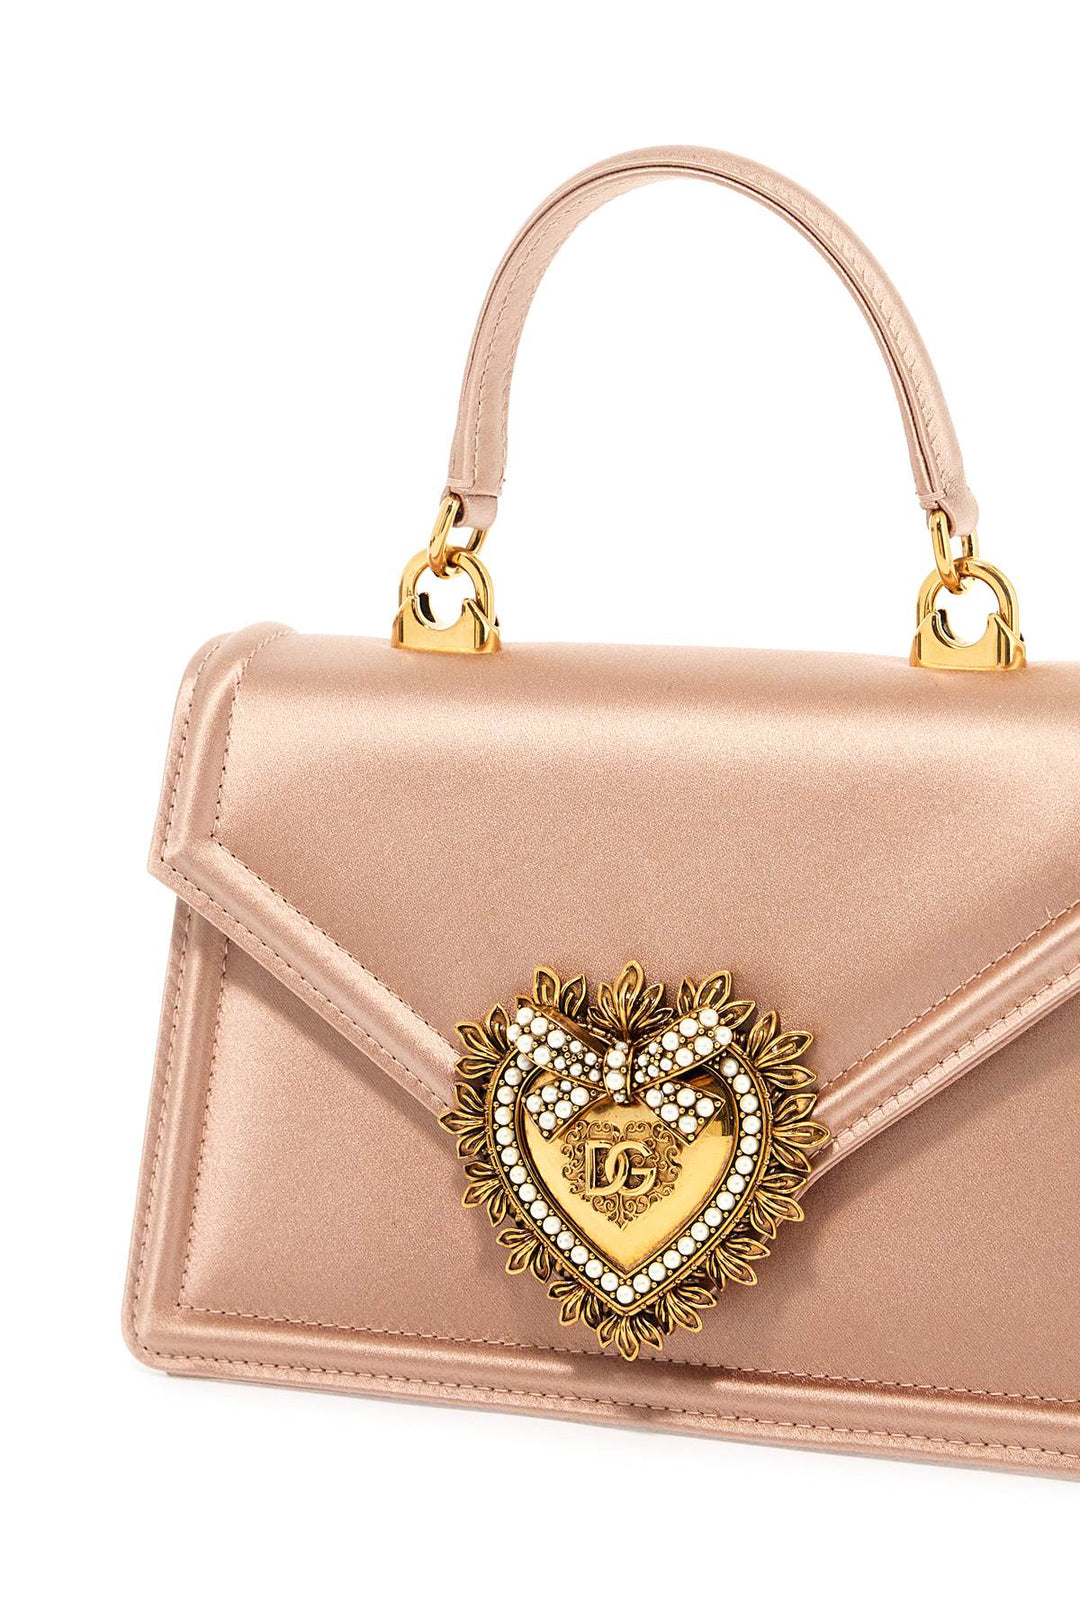 Dolce & Gabbana Satin Small Devotion Bag   Pink